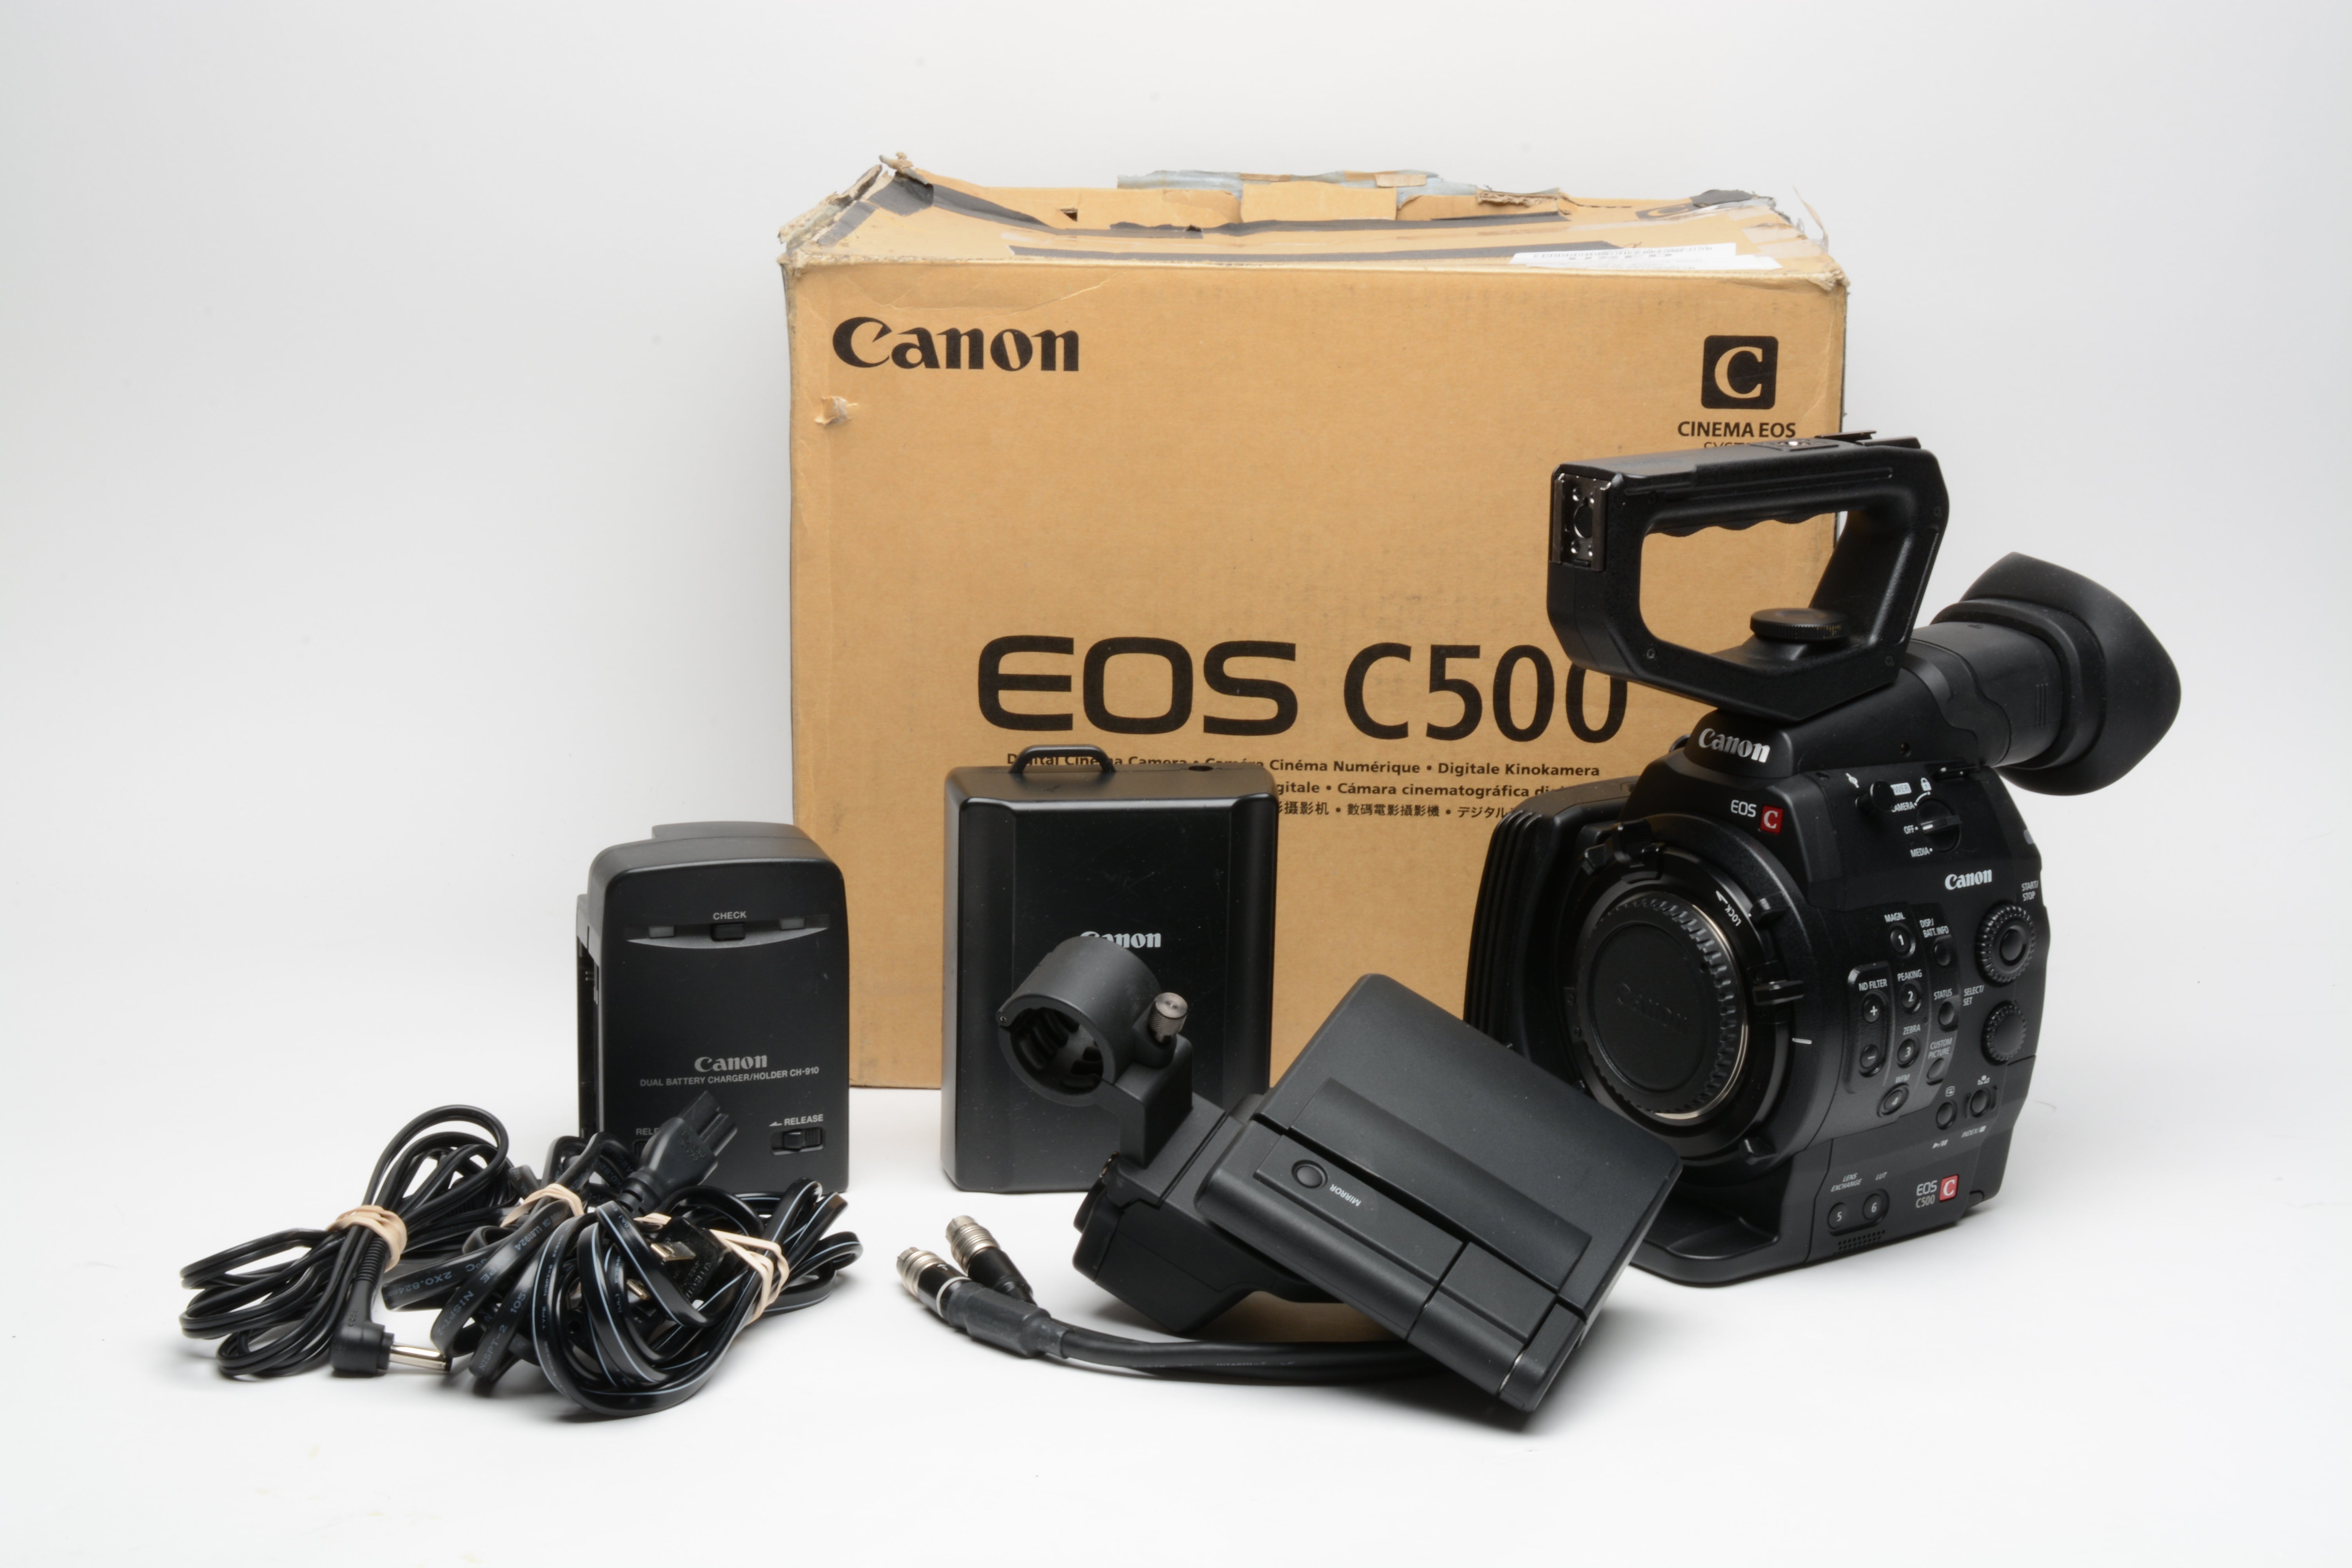 Canon Cinema Eos C500 4k Official Website | www.itecongo.com